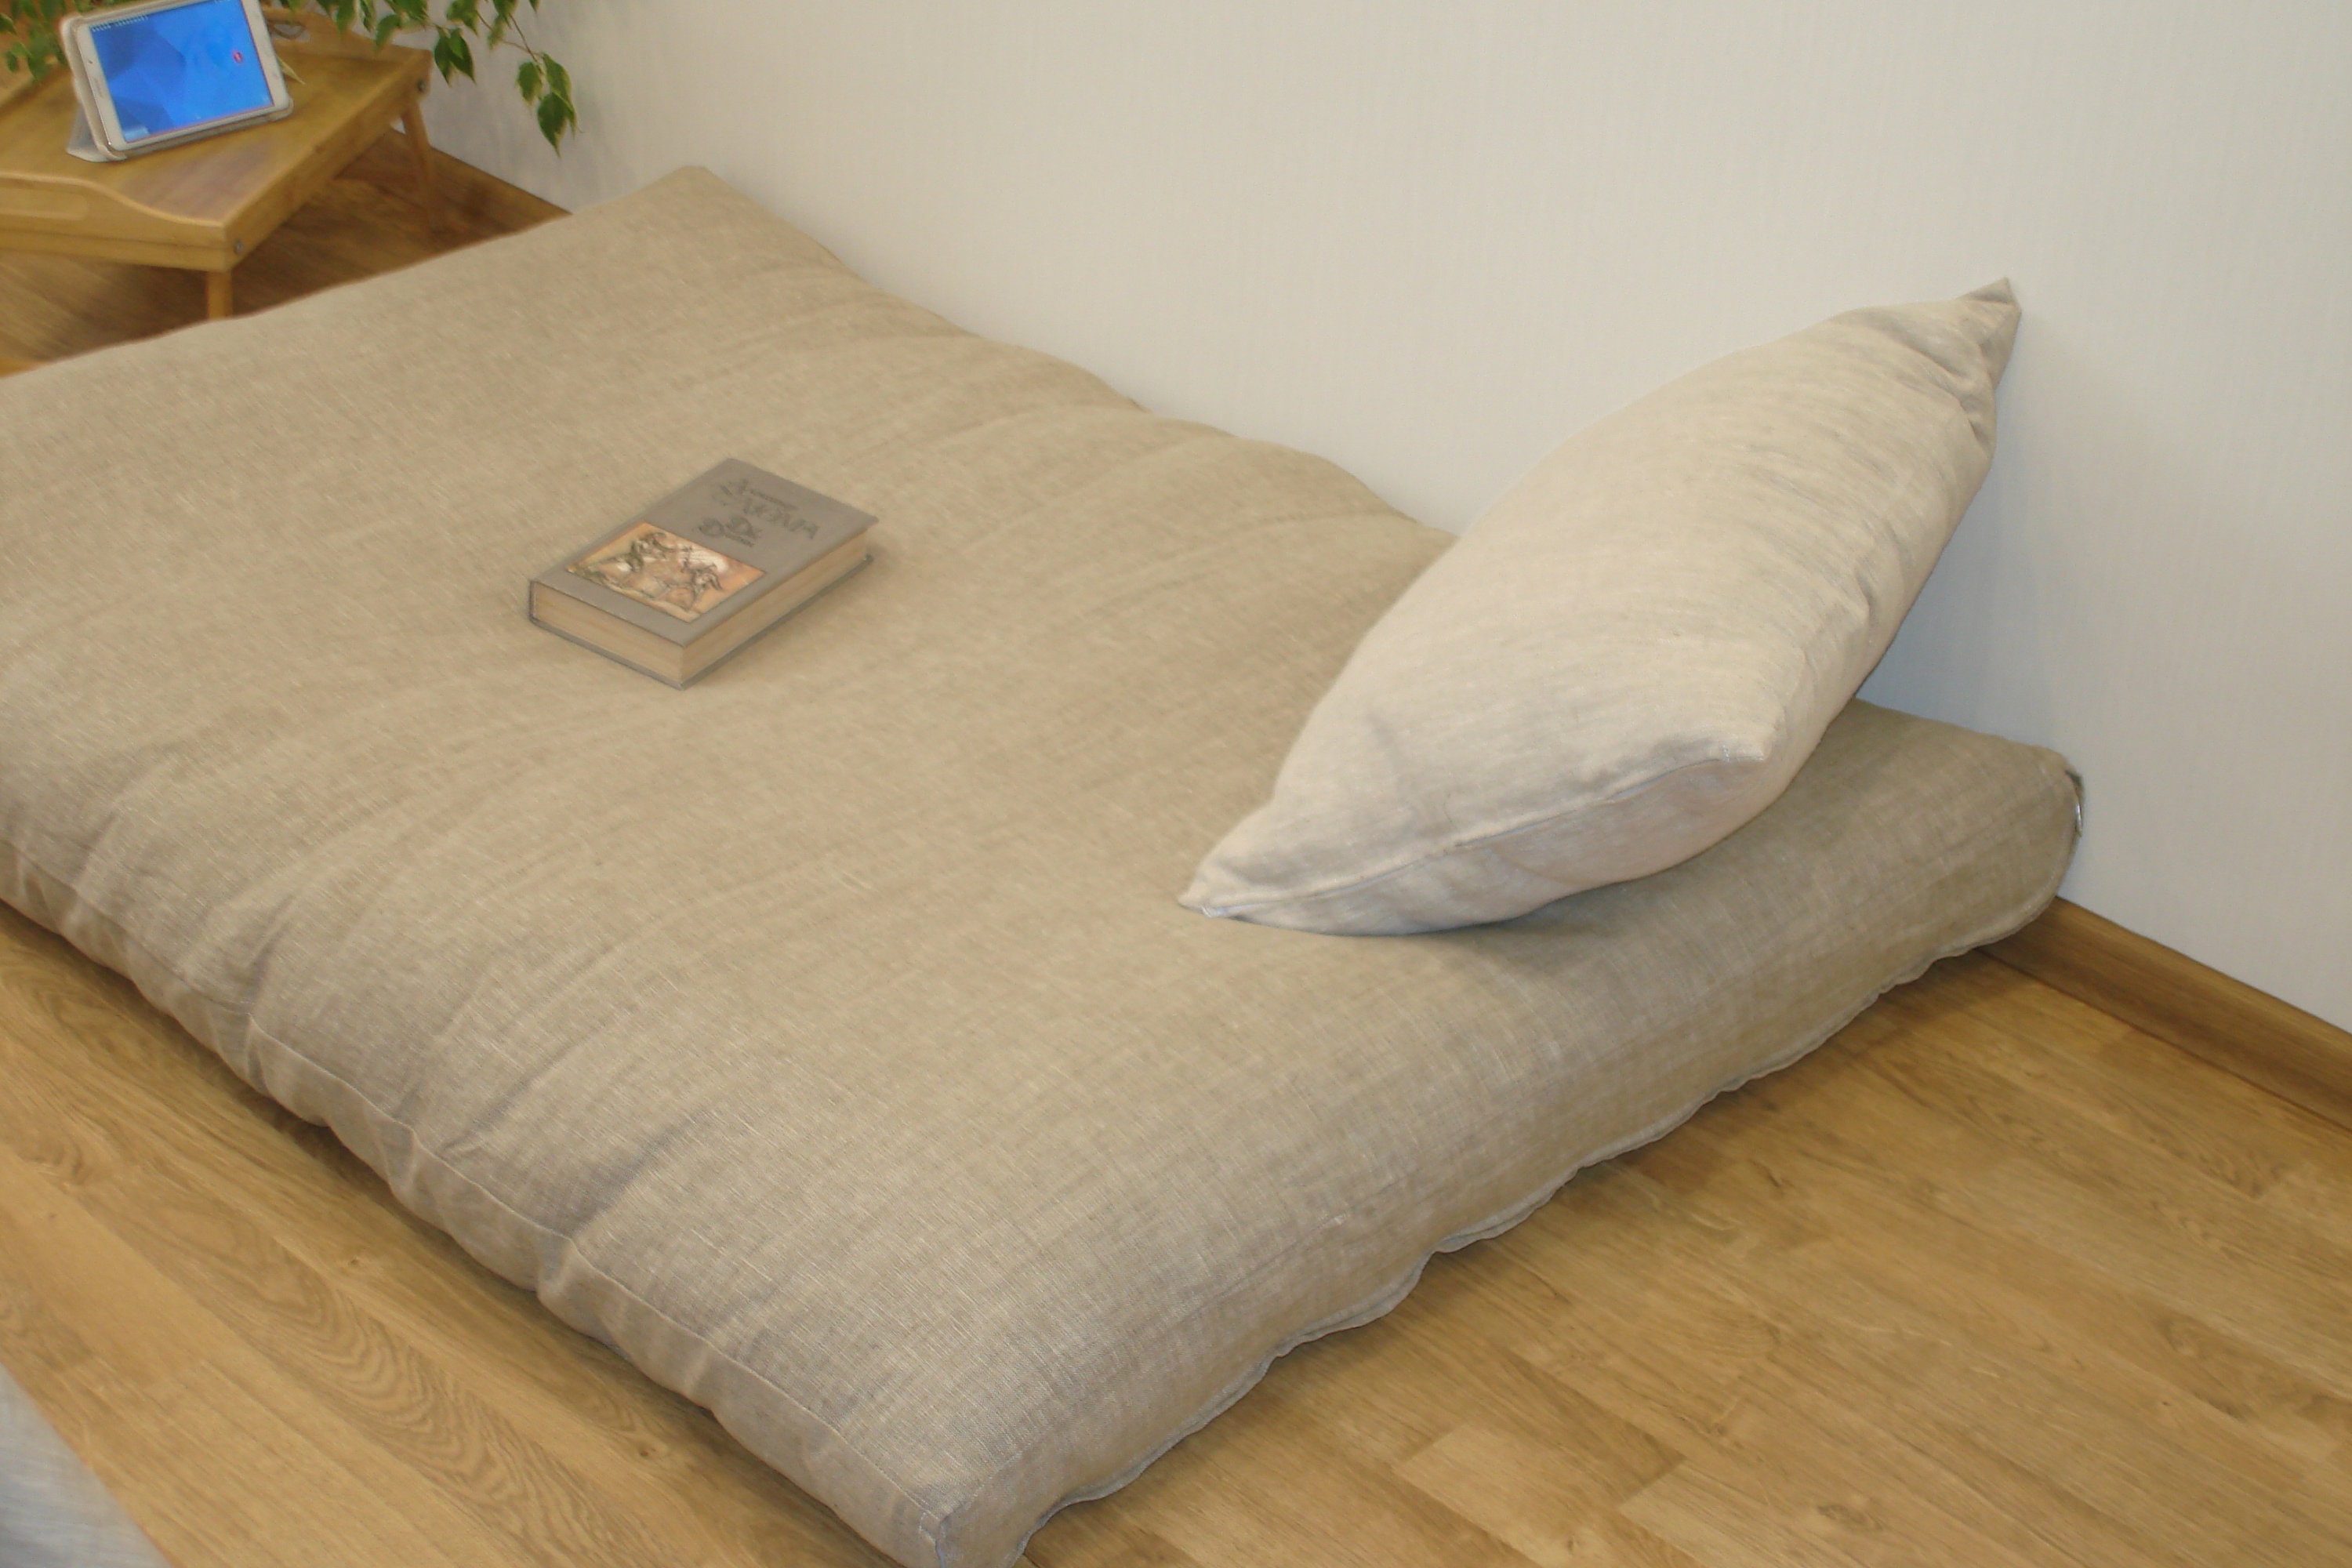 Huge Pillow Lying Frog Plush Doll Home Sofa Bed Cushion Big Floor